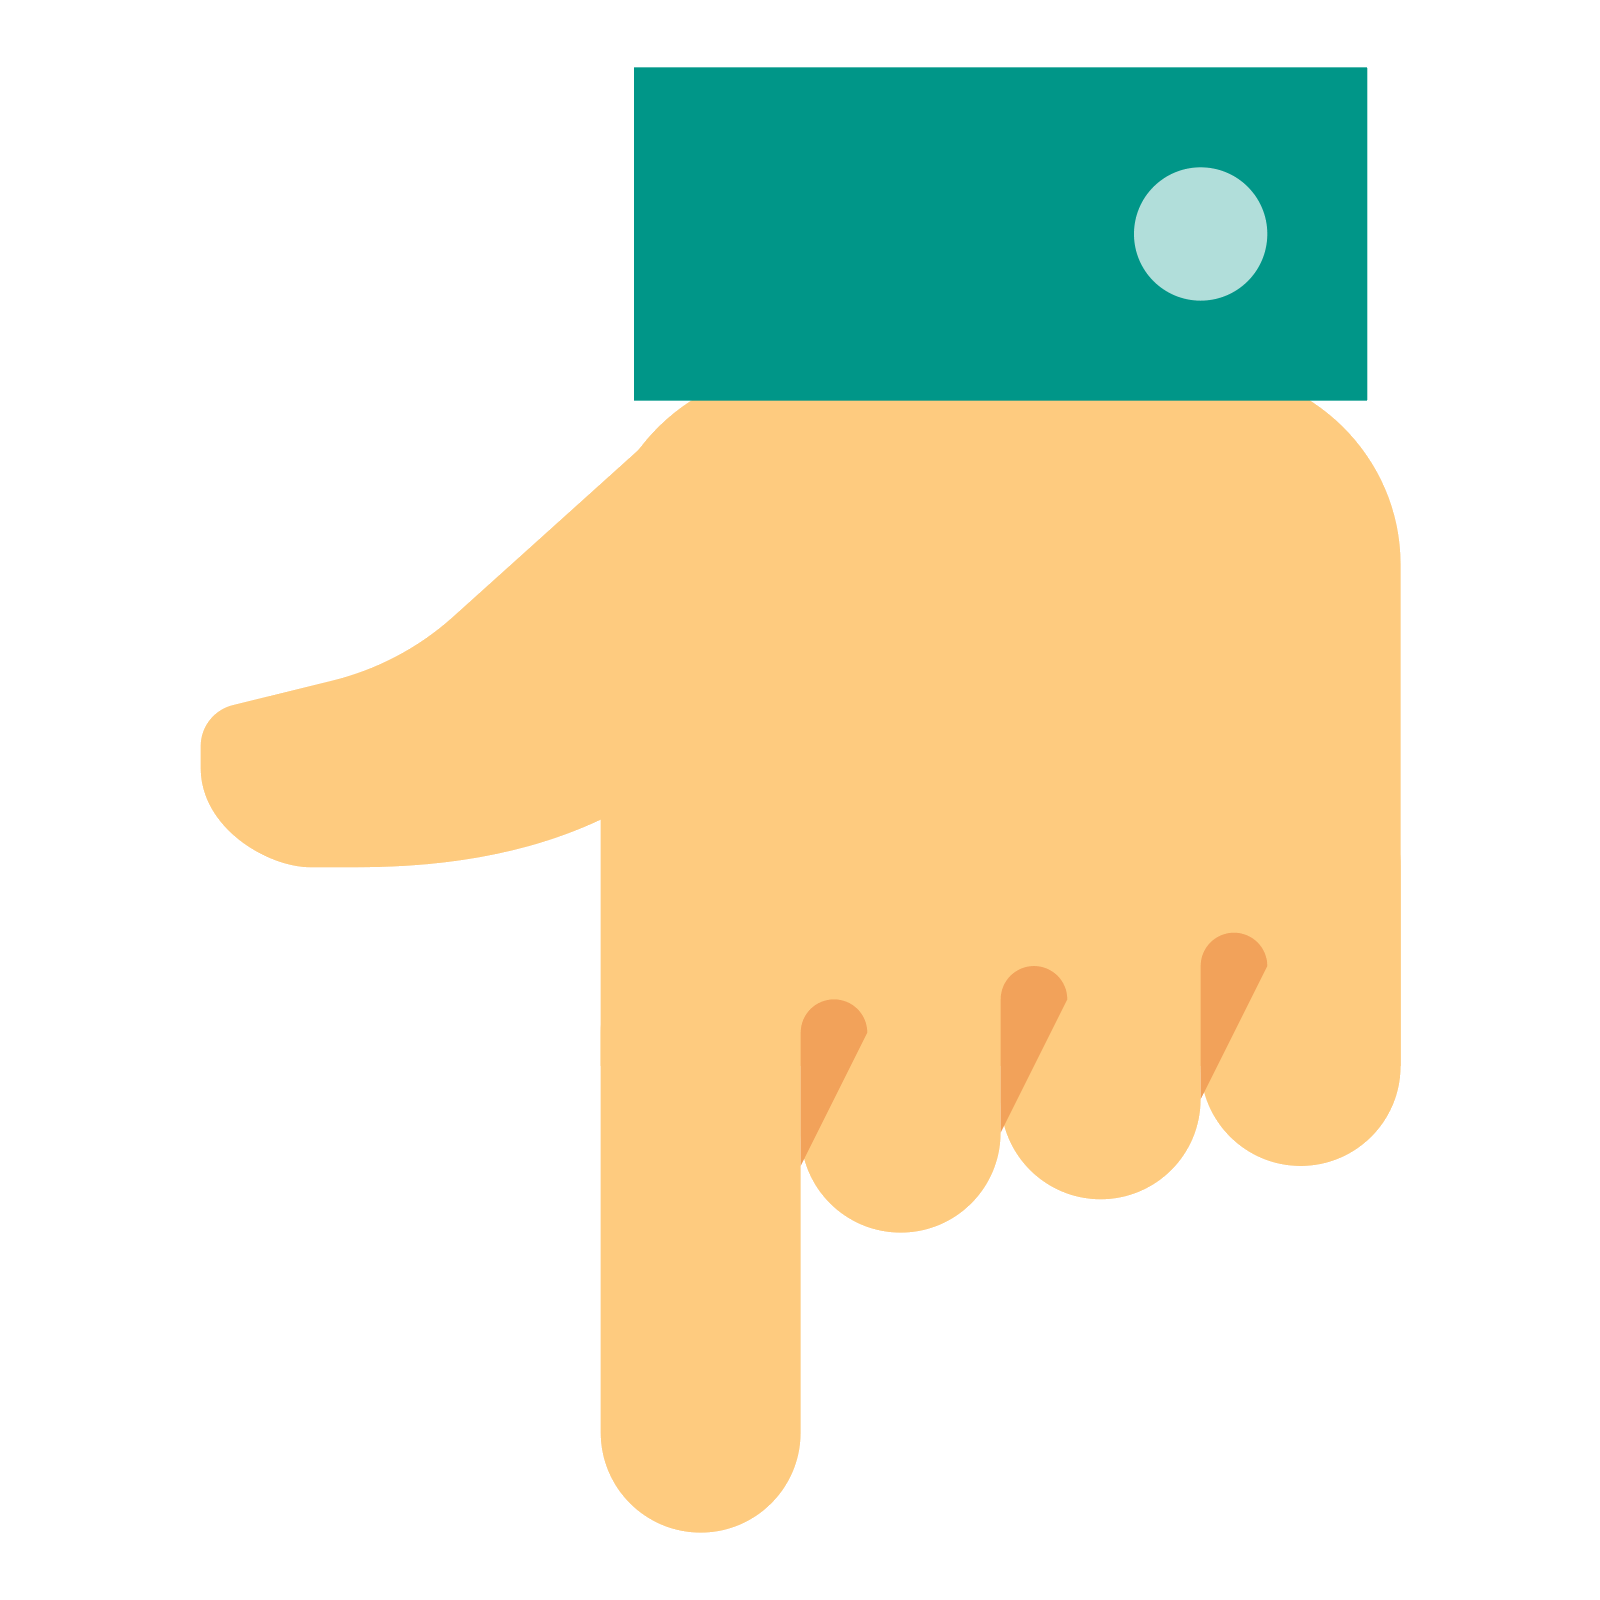 hand Icon